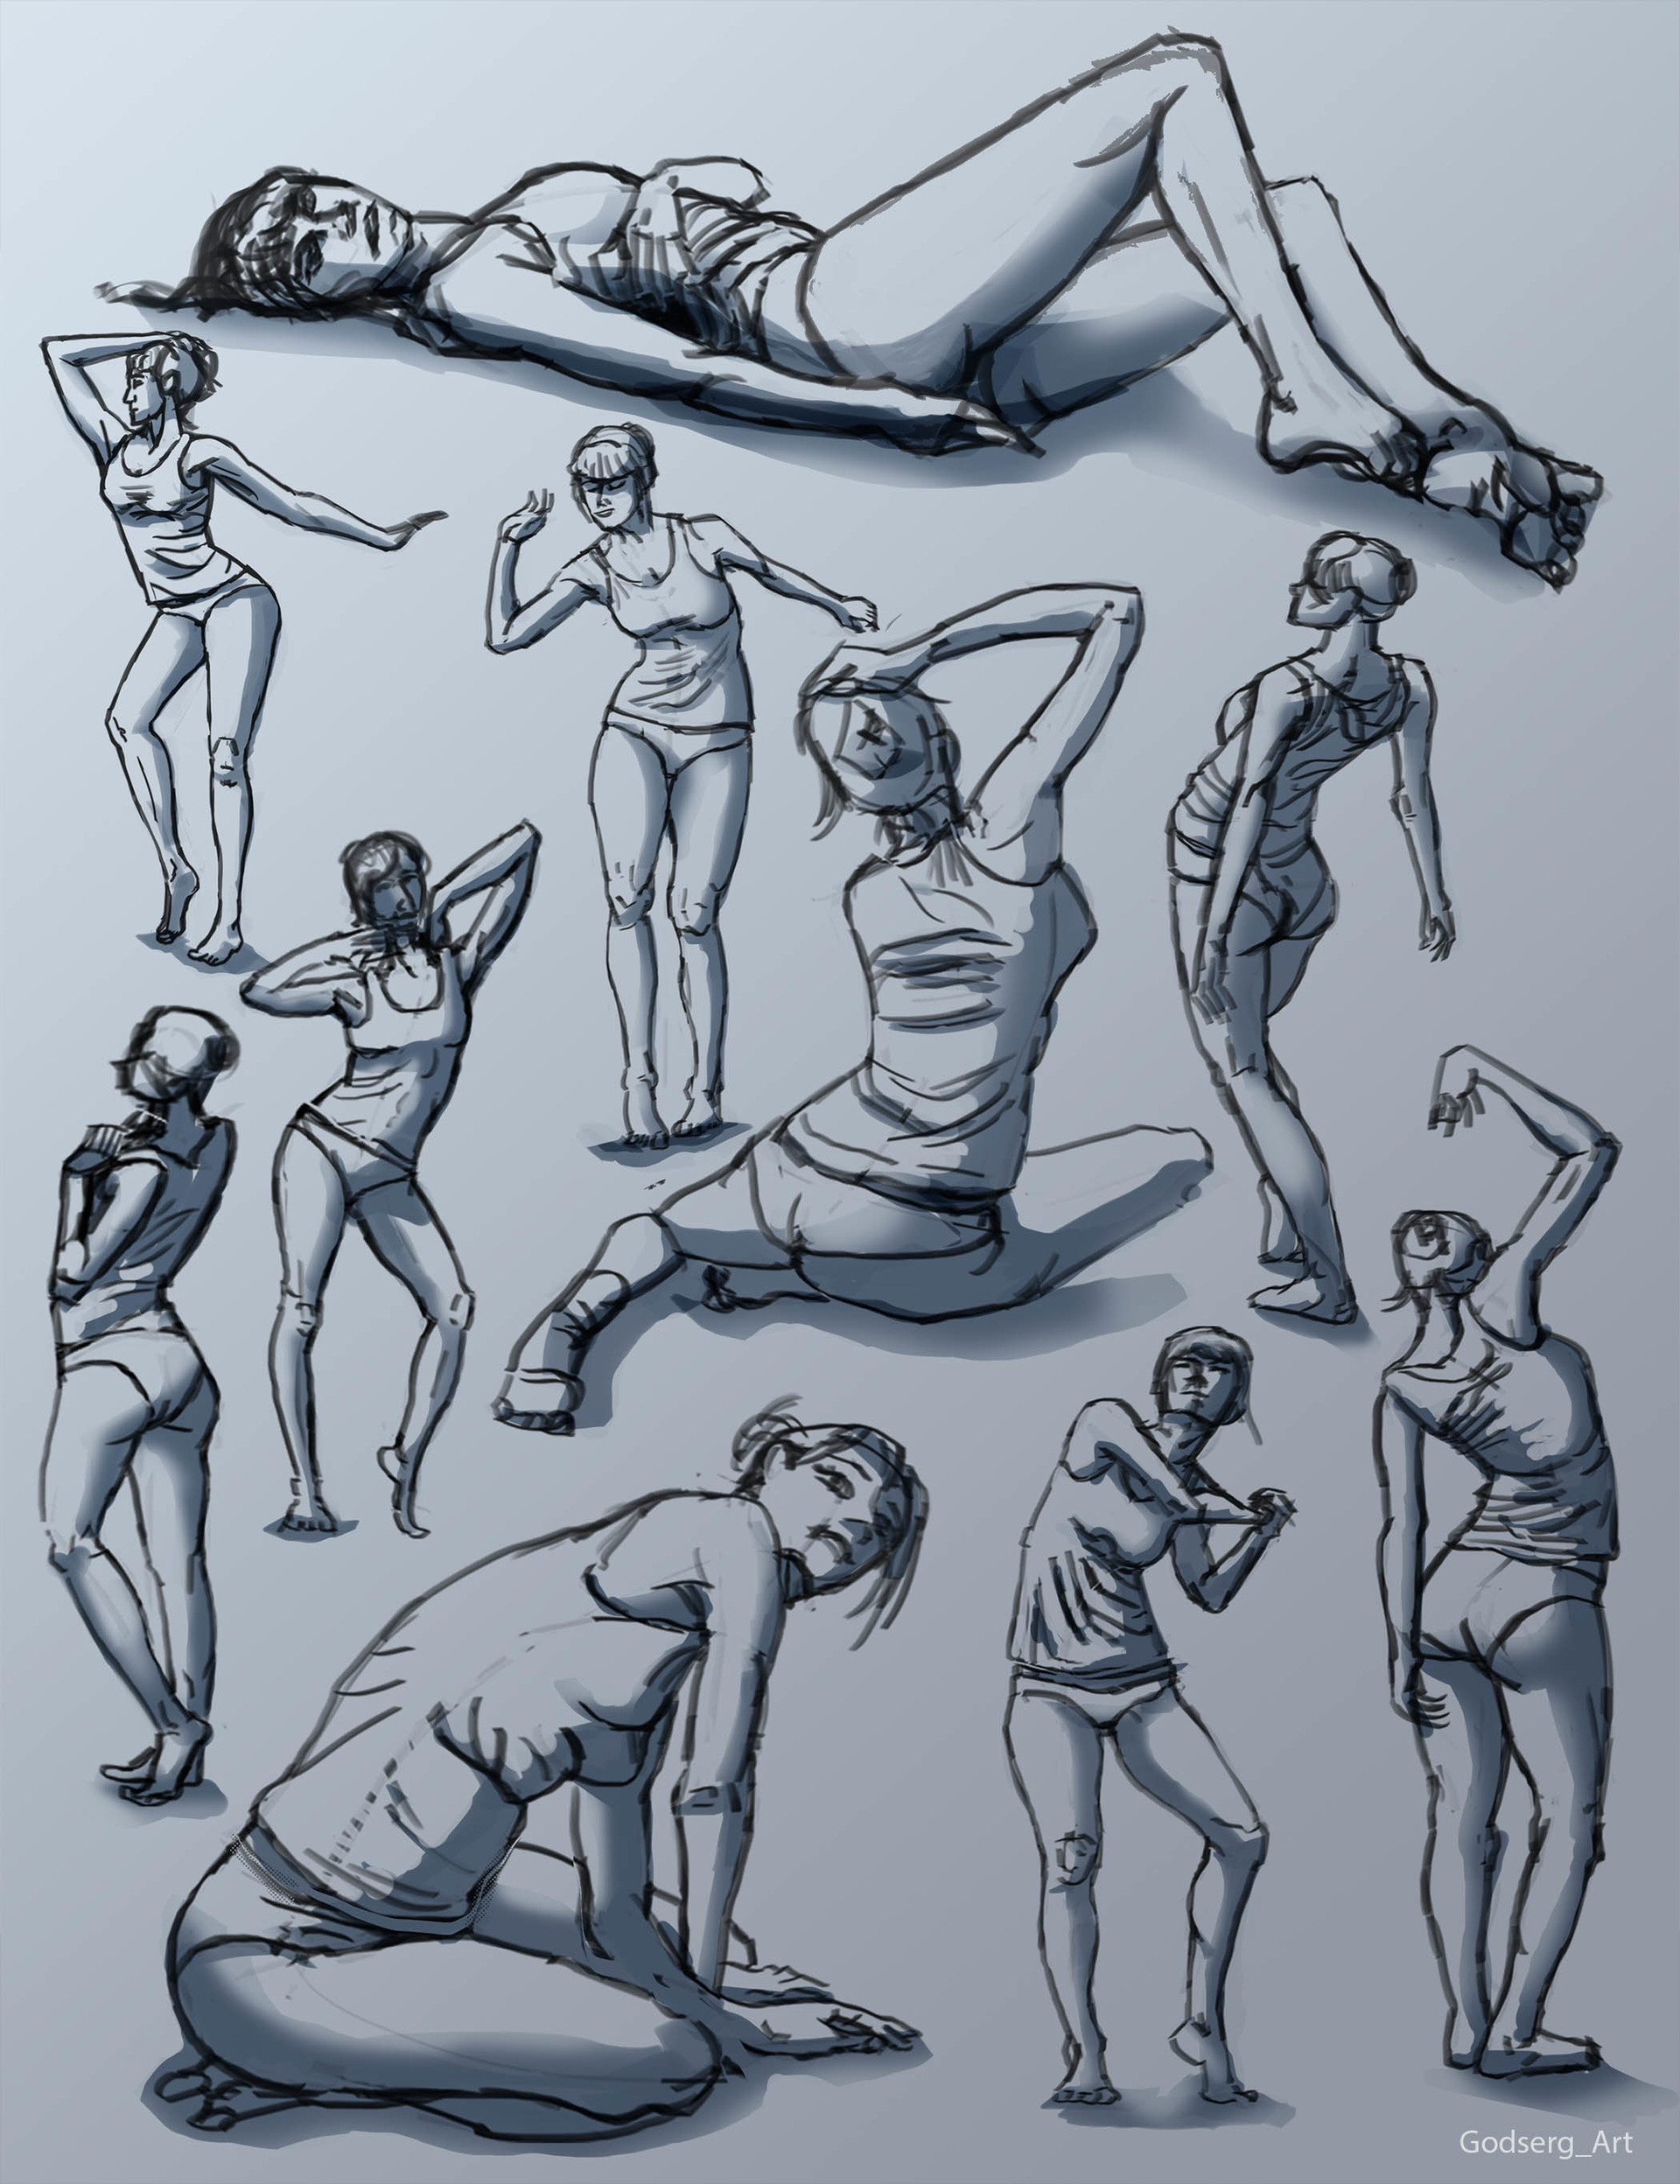 Godserg _art - Female figure sketches